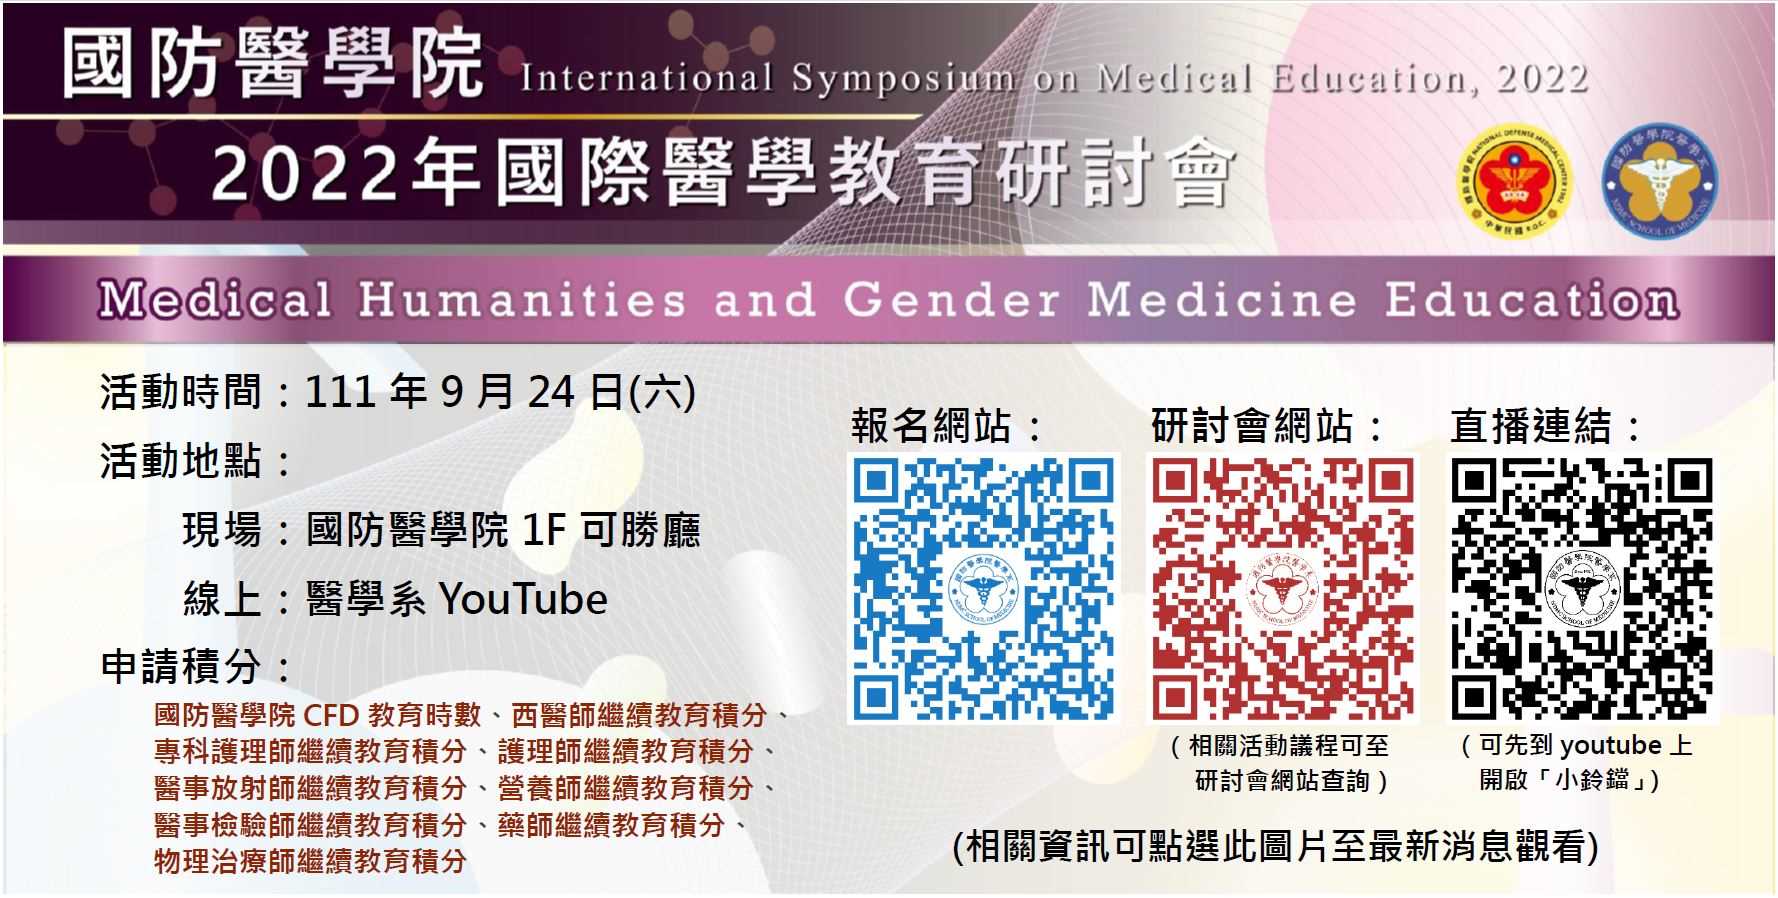 【活動快訊】2022 國防醫學院醫學系醫學教育研討會 - Medical Humanities and Gender Medicine Education
